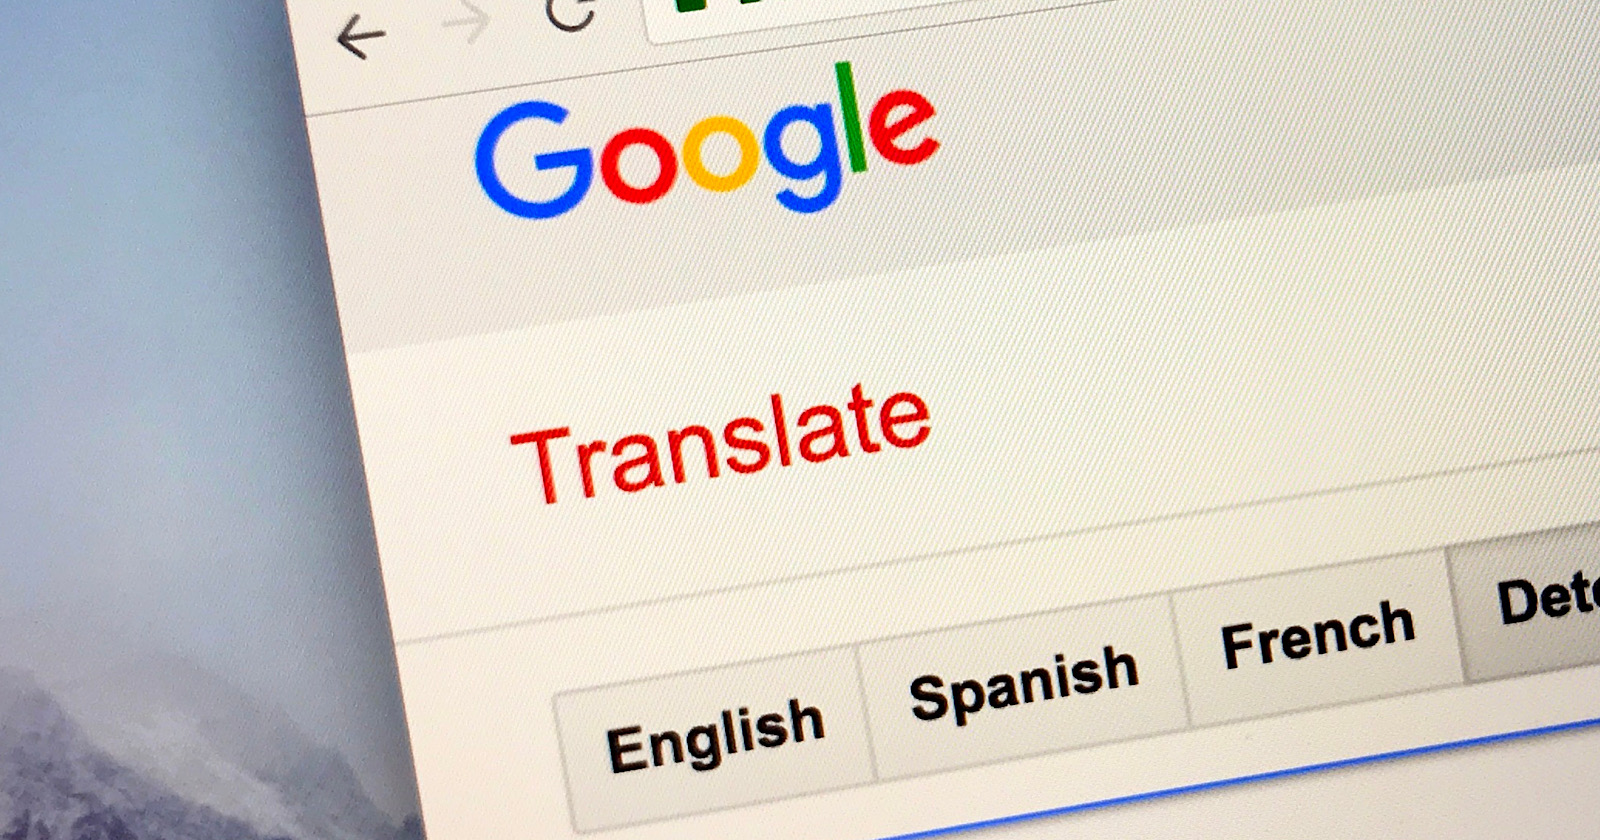 Google translate english to spanish